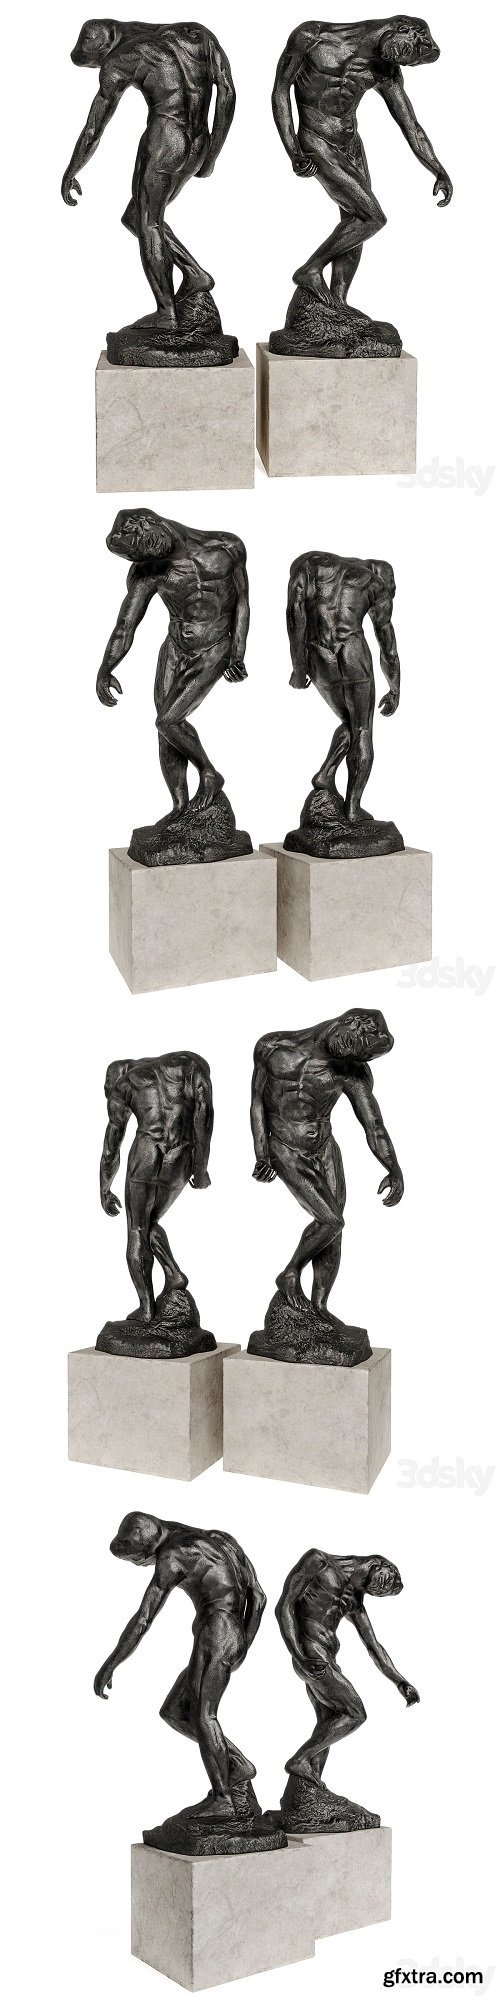 Grande Ombre Auguste Rodin sculpture